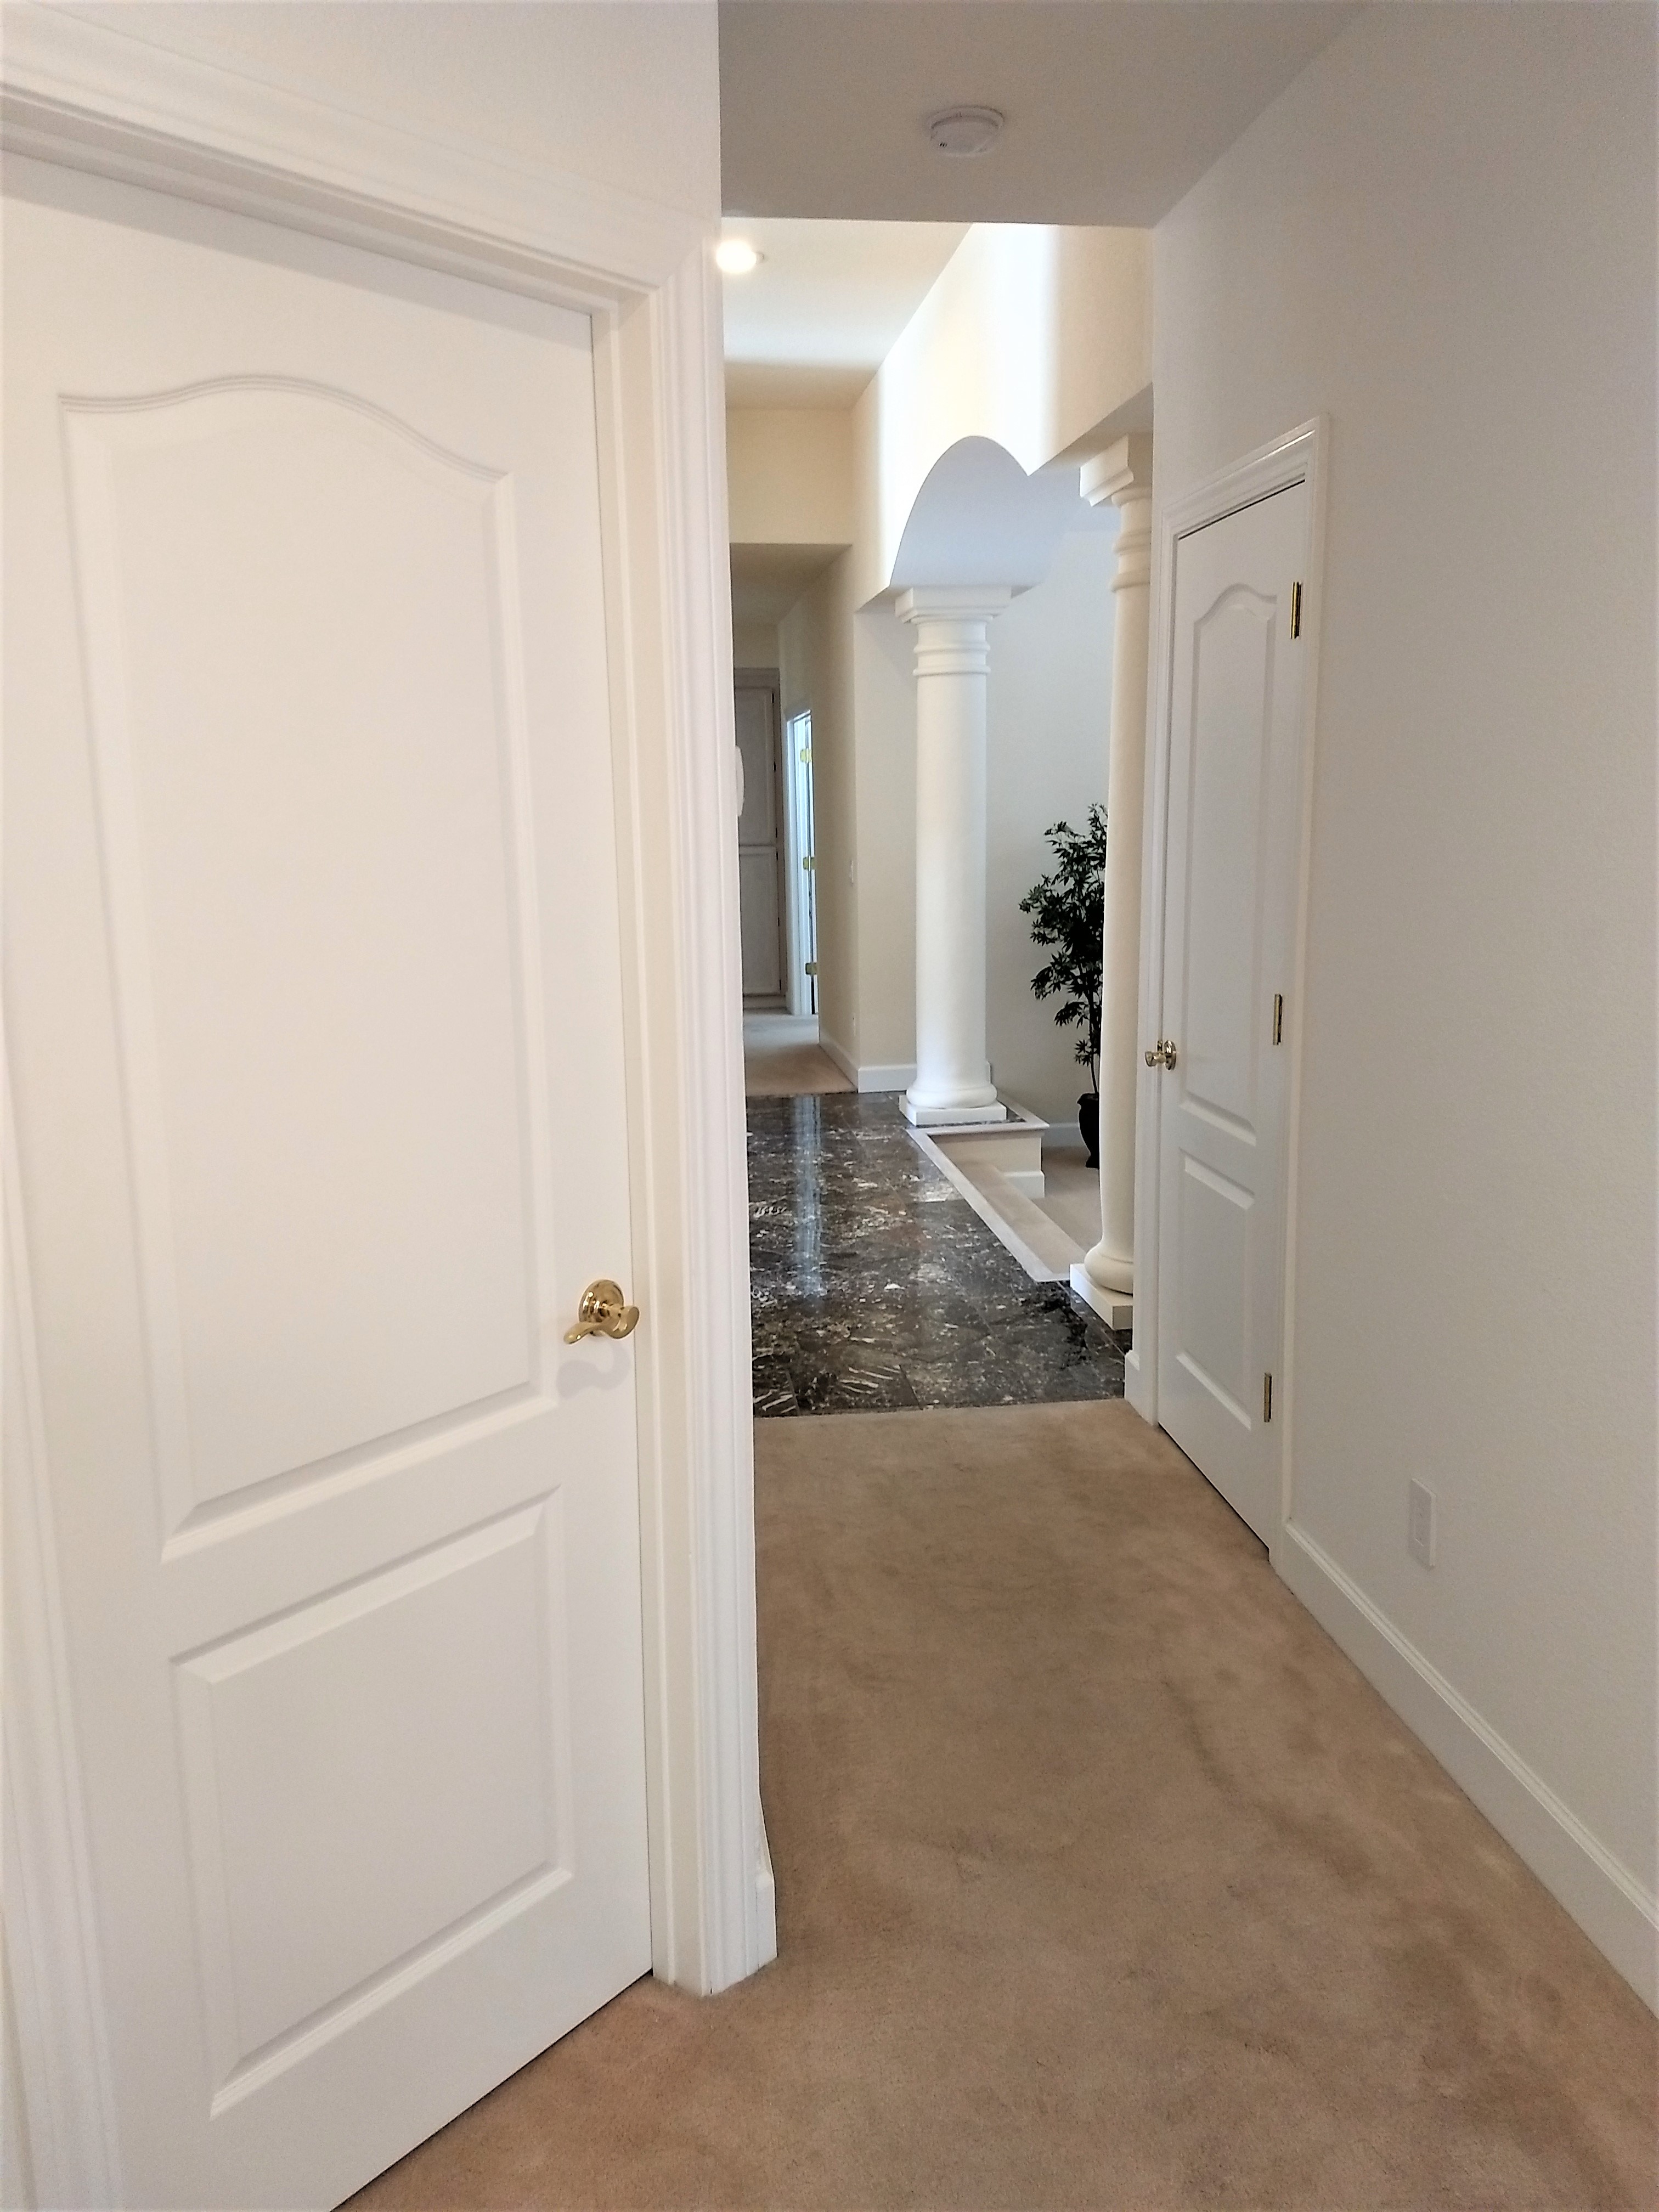 2pnl-princeton-style-interior-doors-hallway.jpg